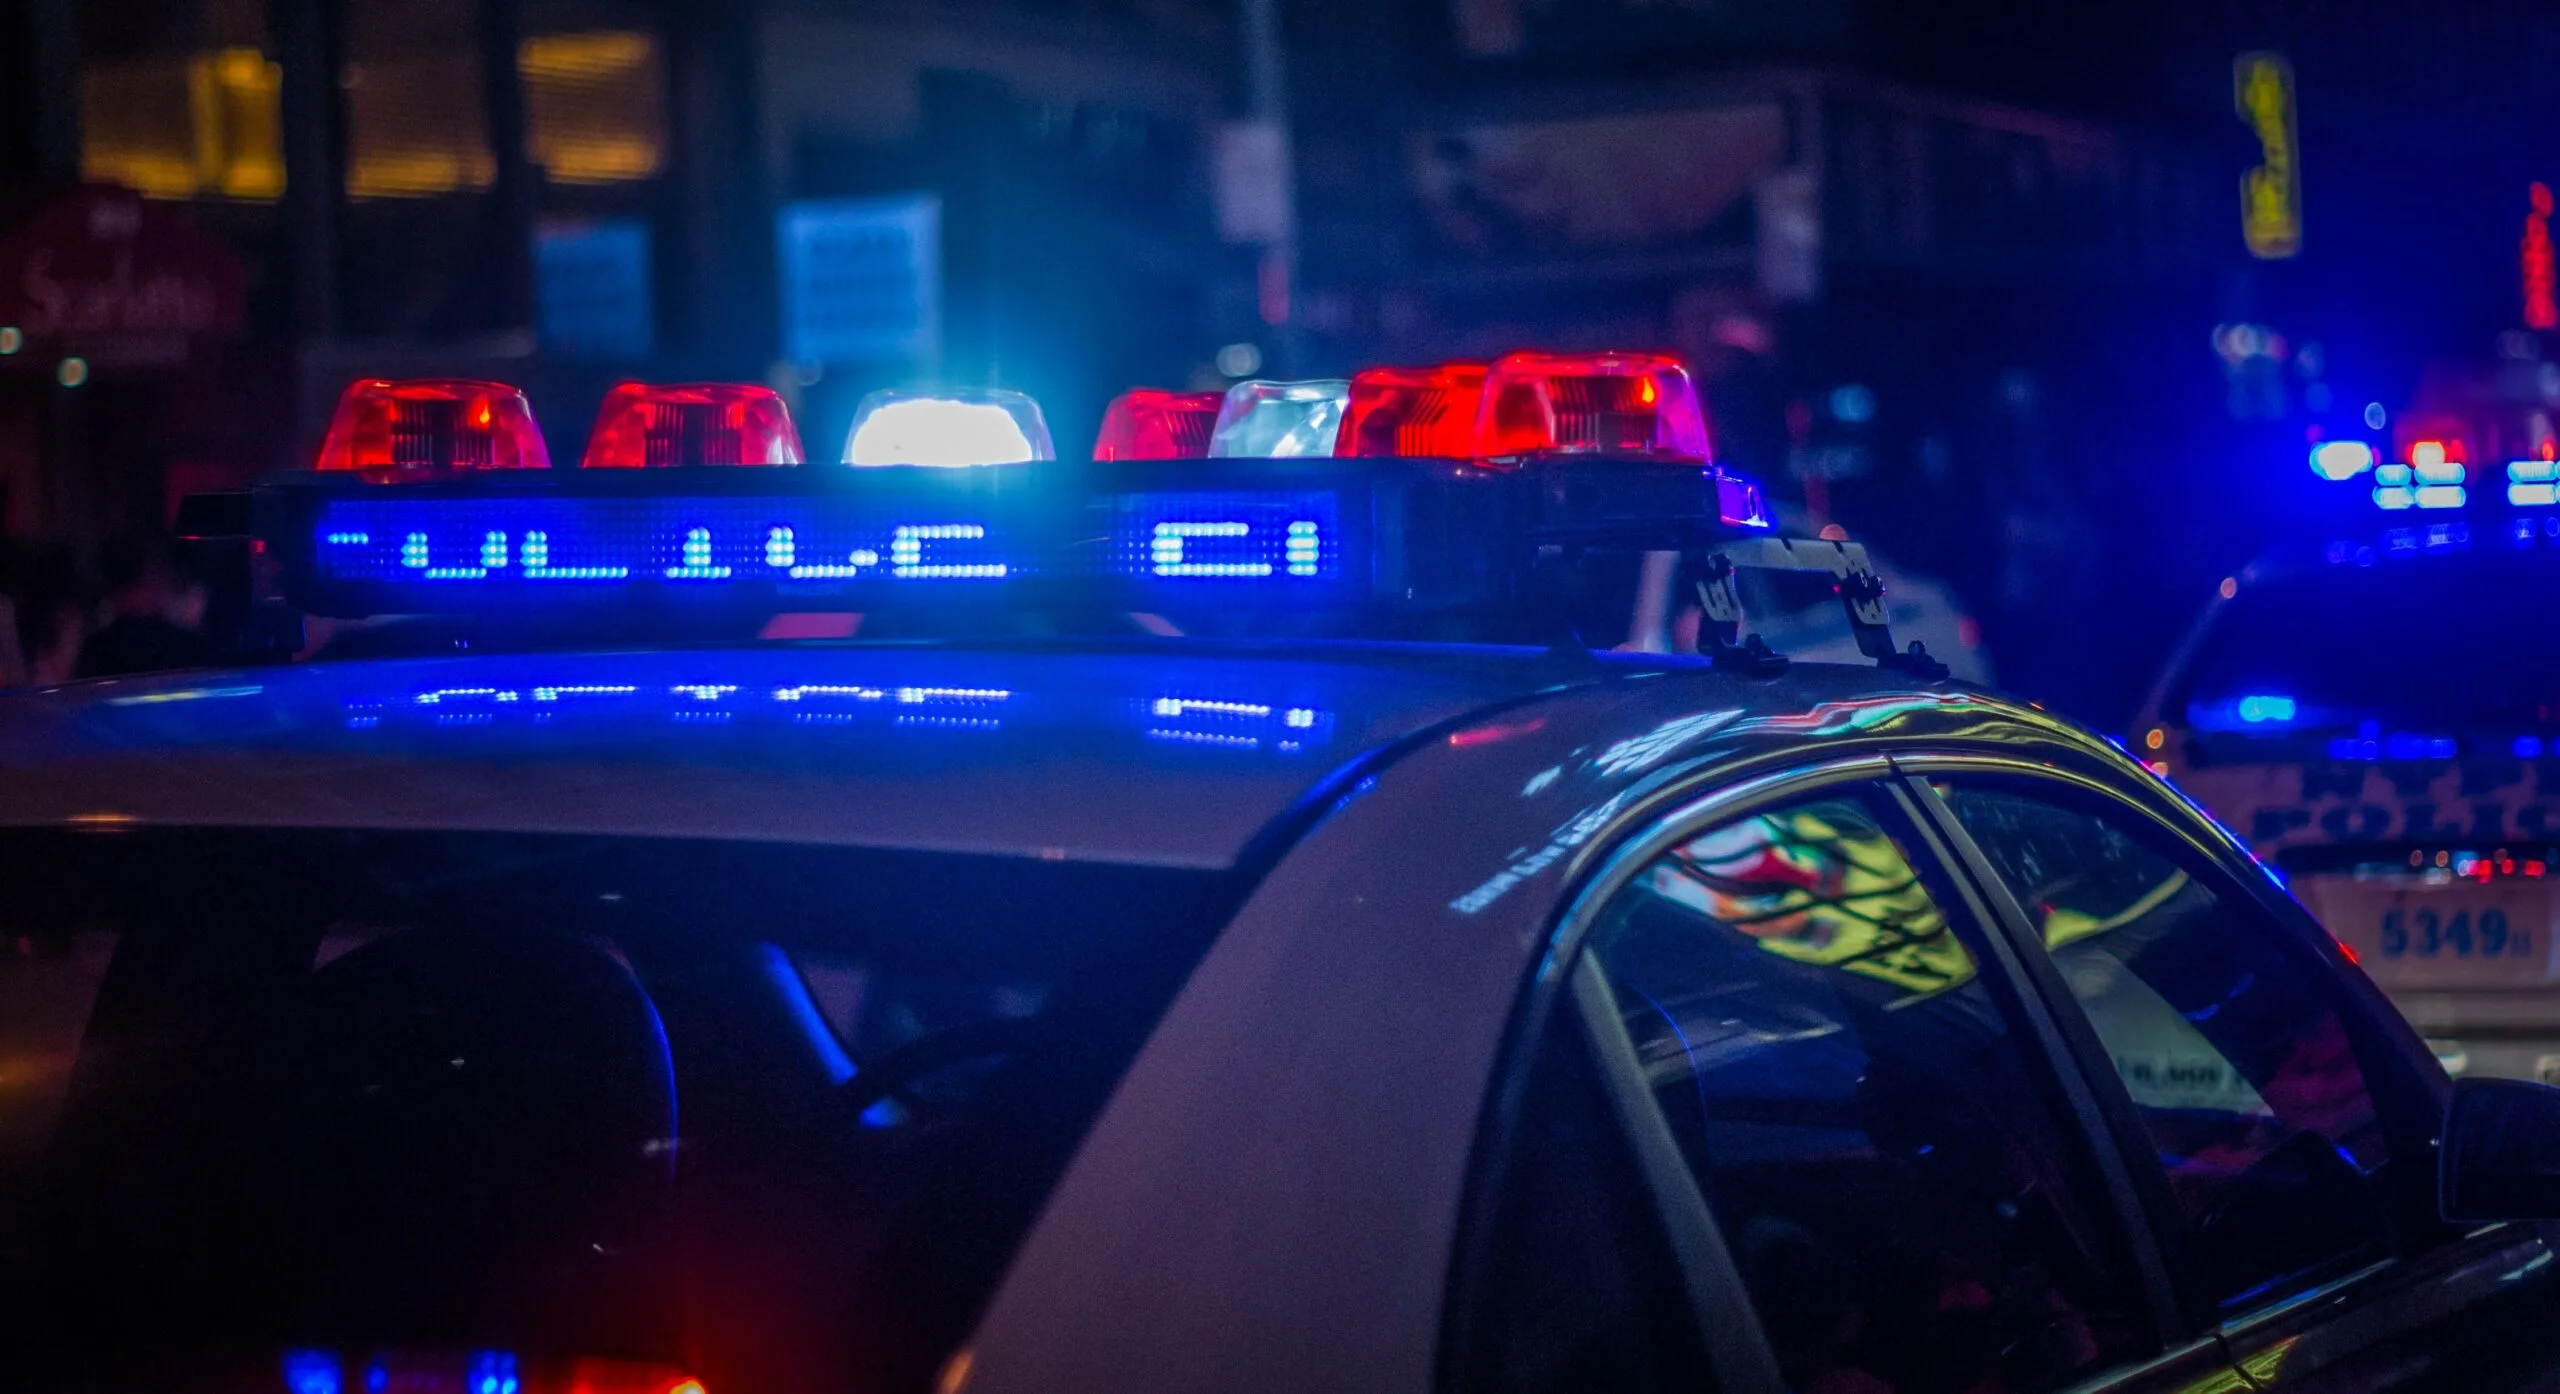 Flashing lights on a police car. (Image: Michael Fortsch/Unsplash)